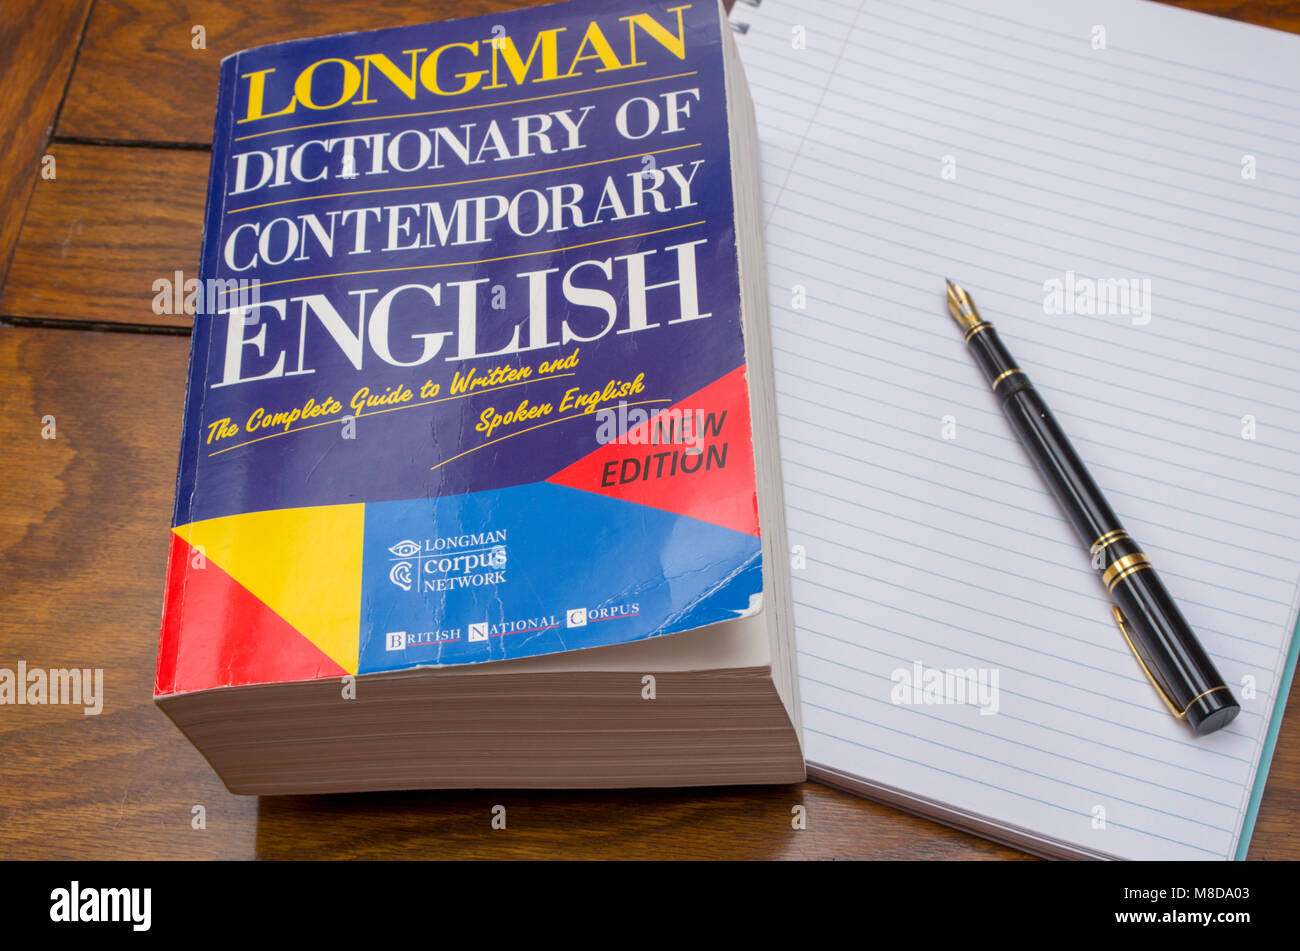 longman dictionary of comtemporary english